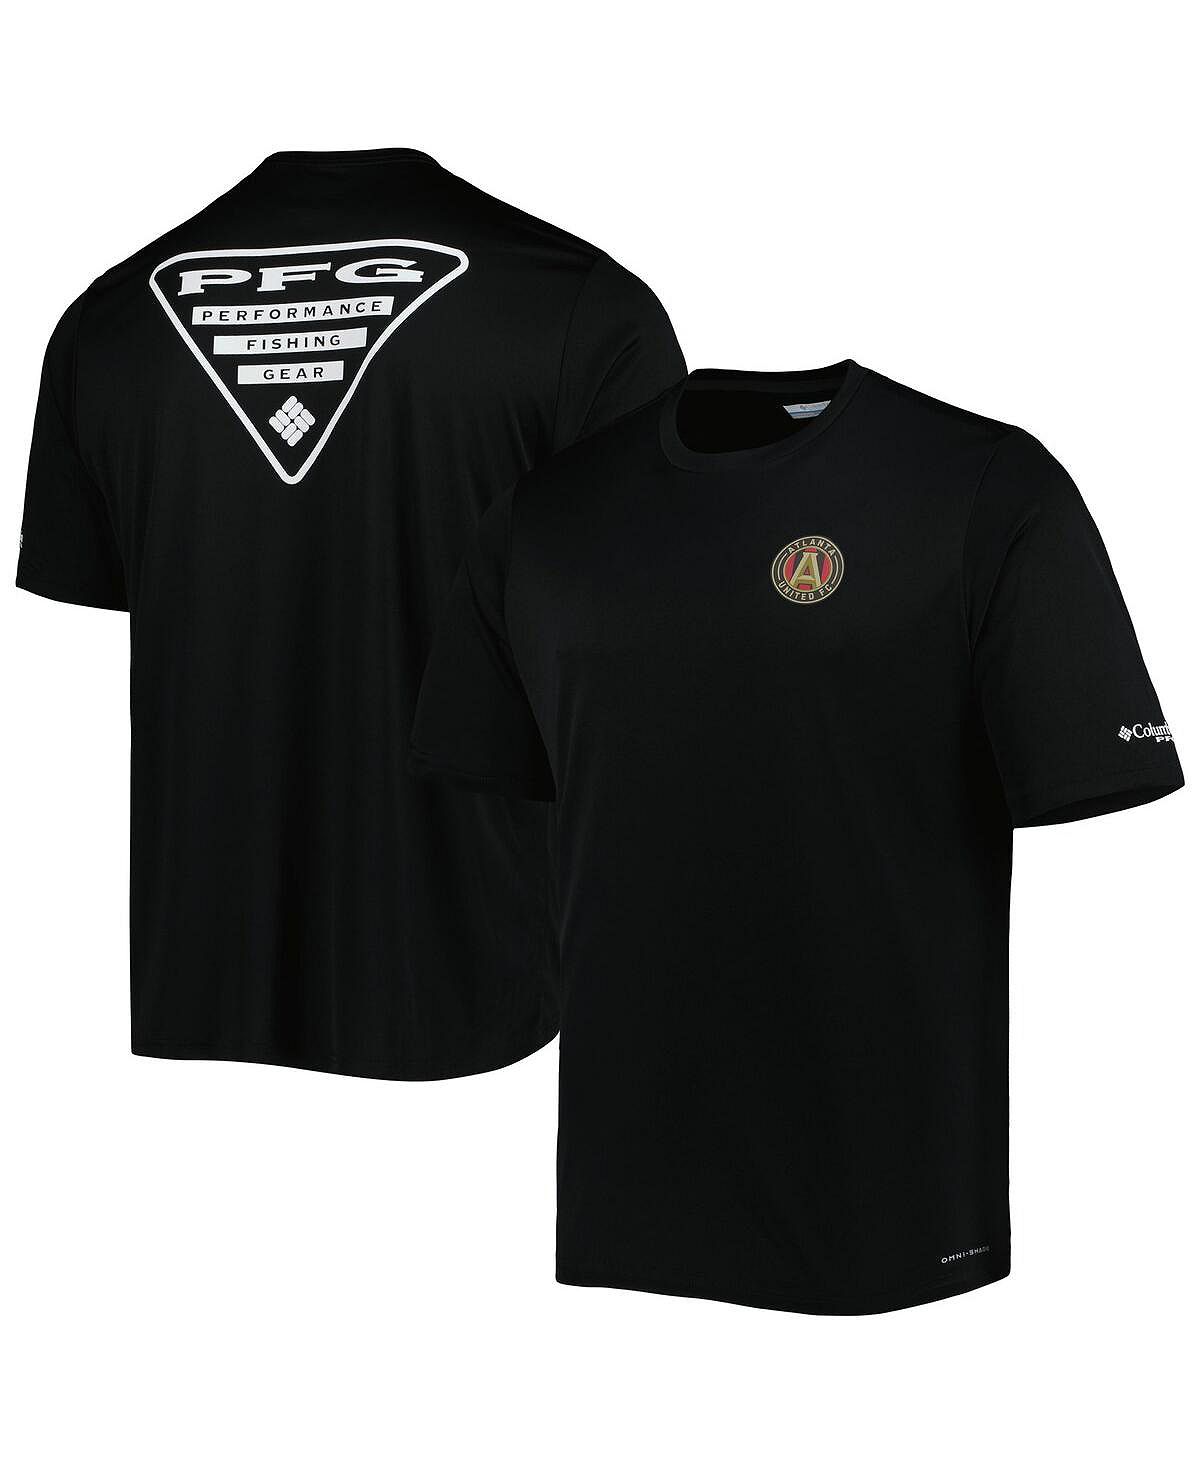 Inter black. Черная футболка Интер Майами. Logo Black Inter. Shirt for Inter Miami.